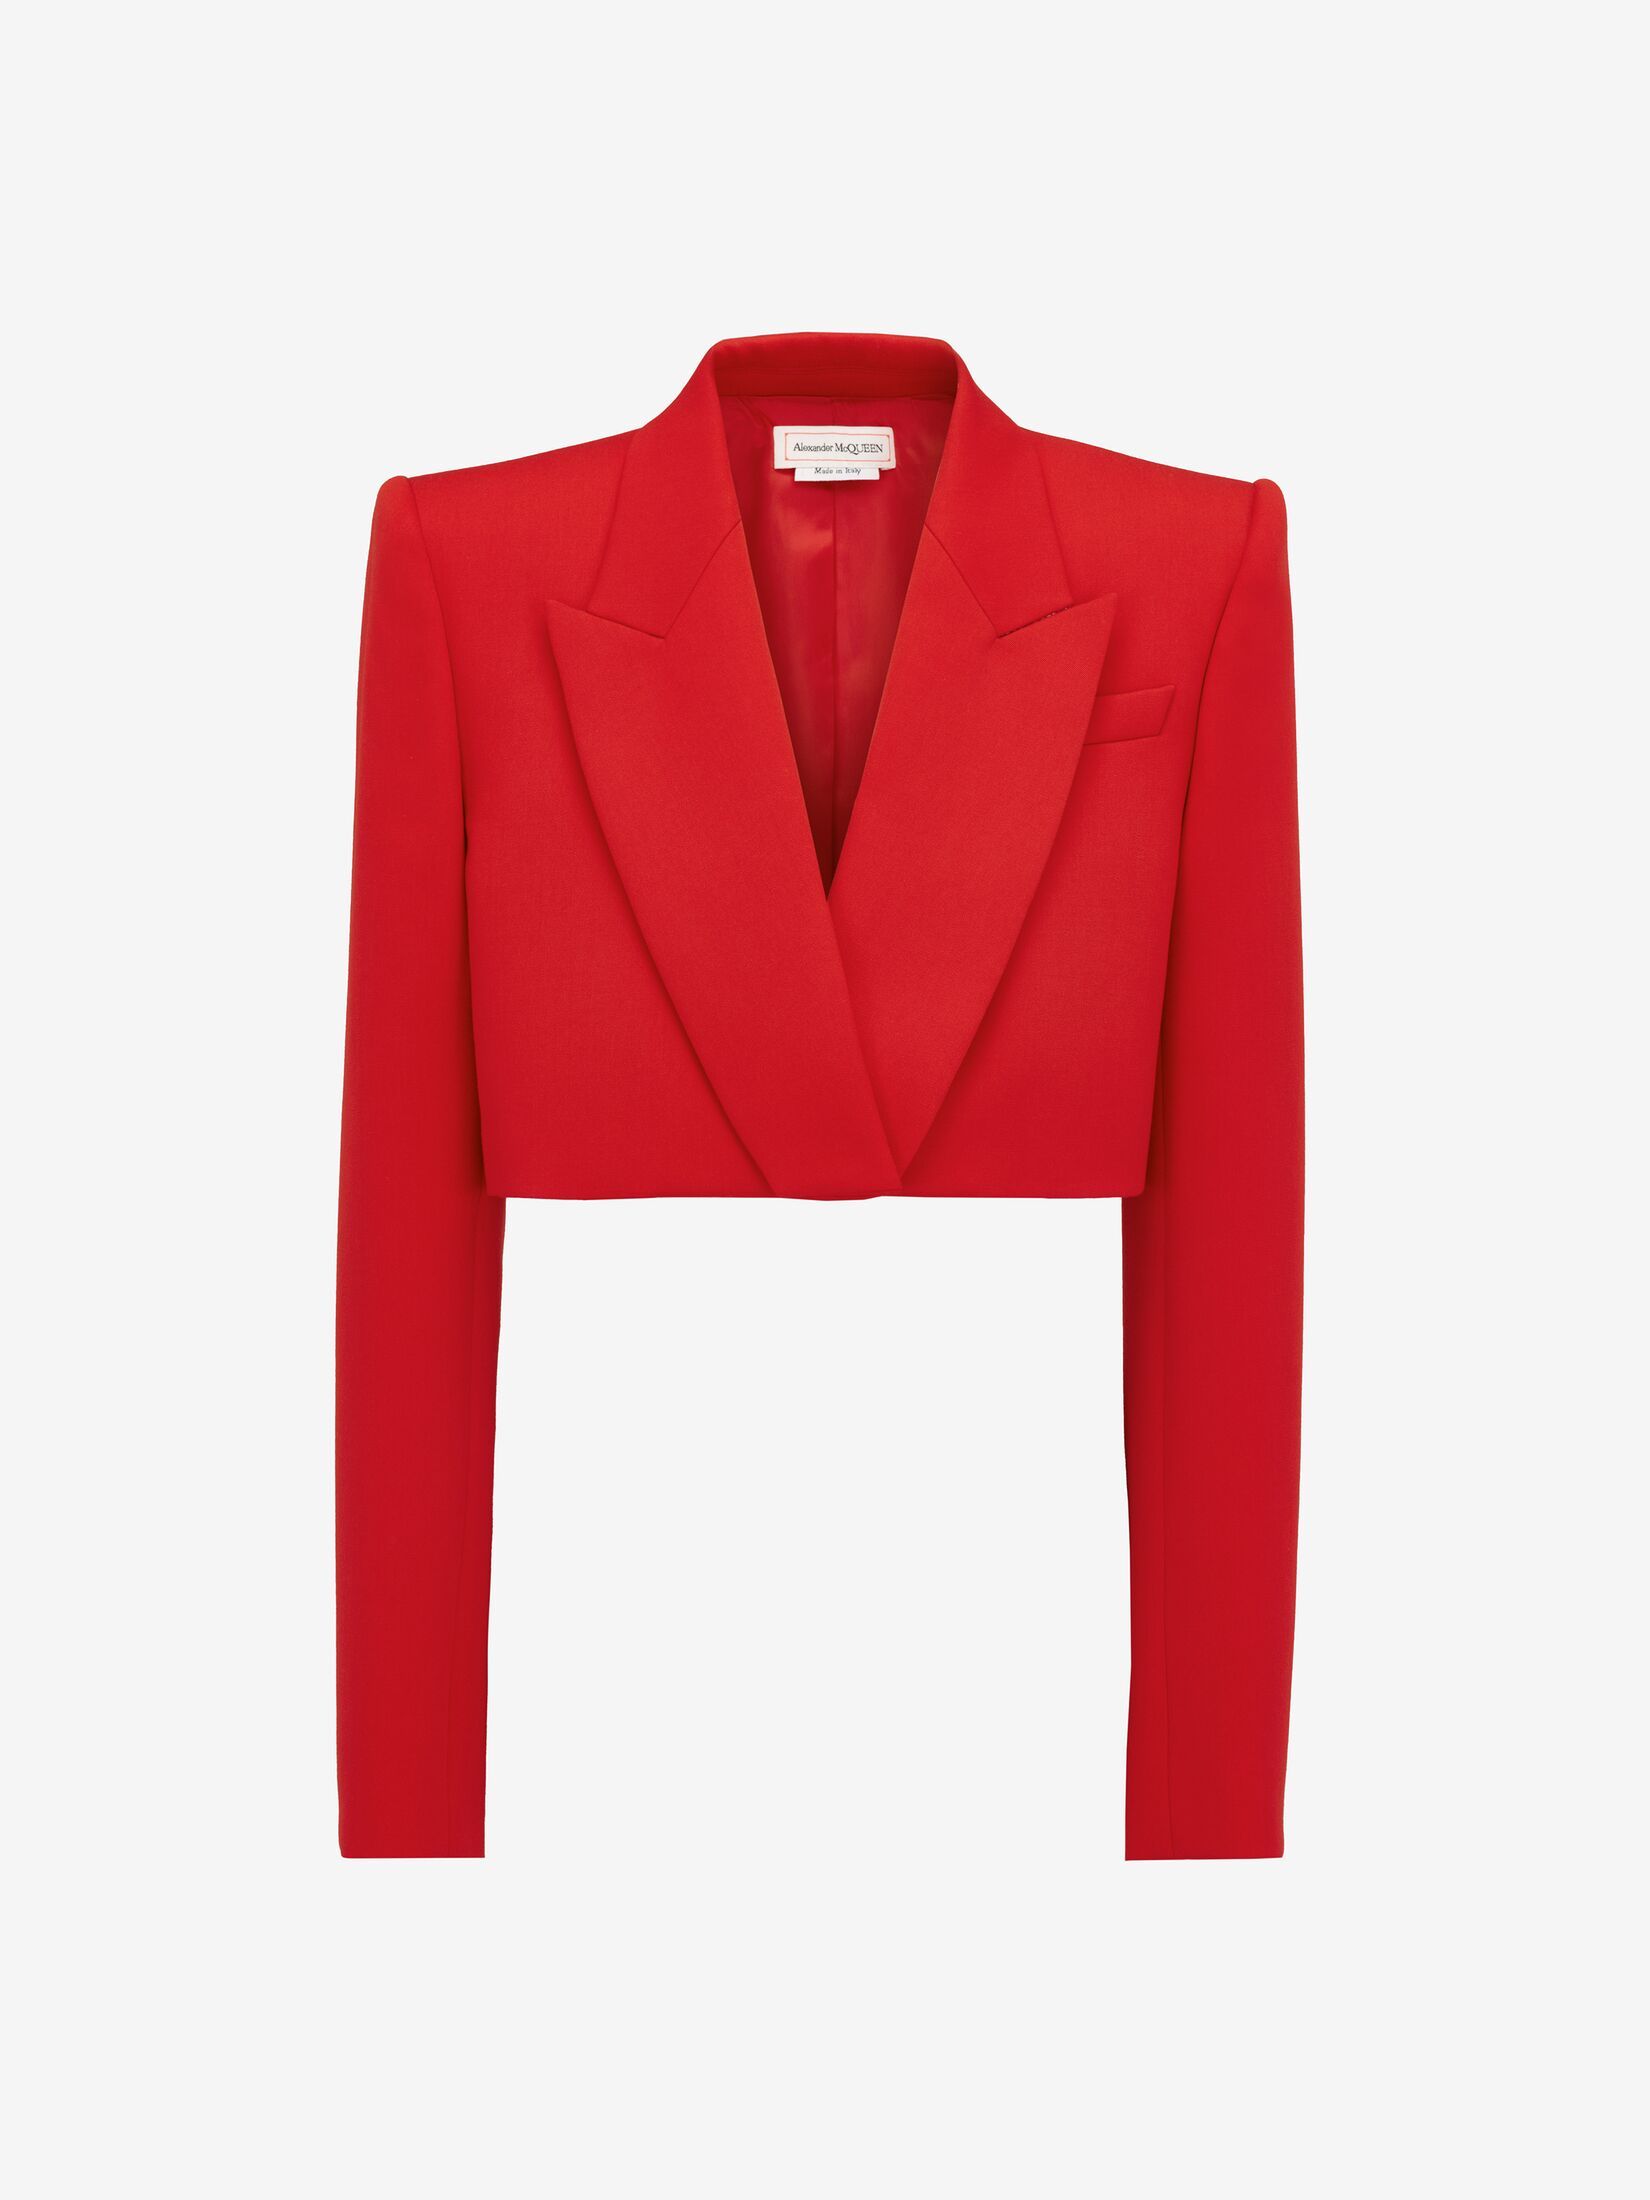 Women's Cropped Tuxedo Jacket in Lust Red | Alexander McQueen